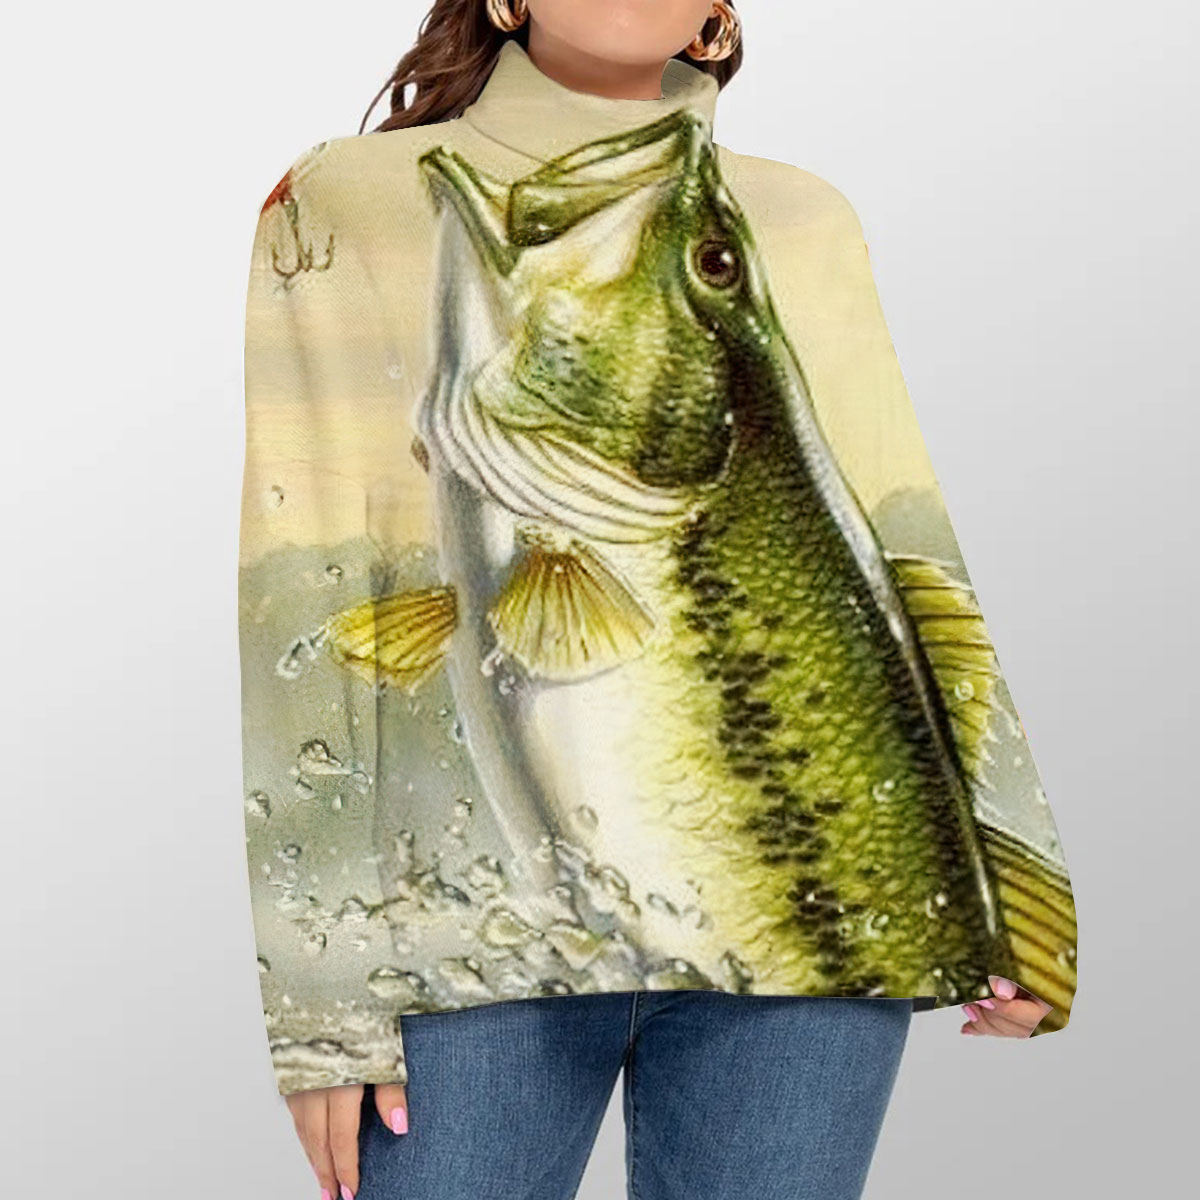 Fishing Turtleneck Sweater_1_2.1